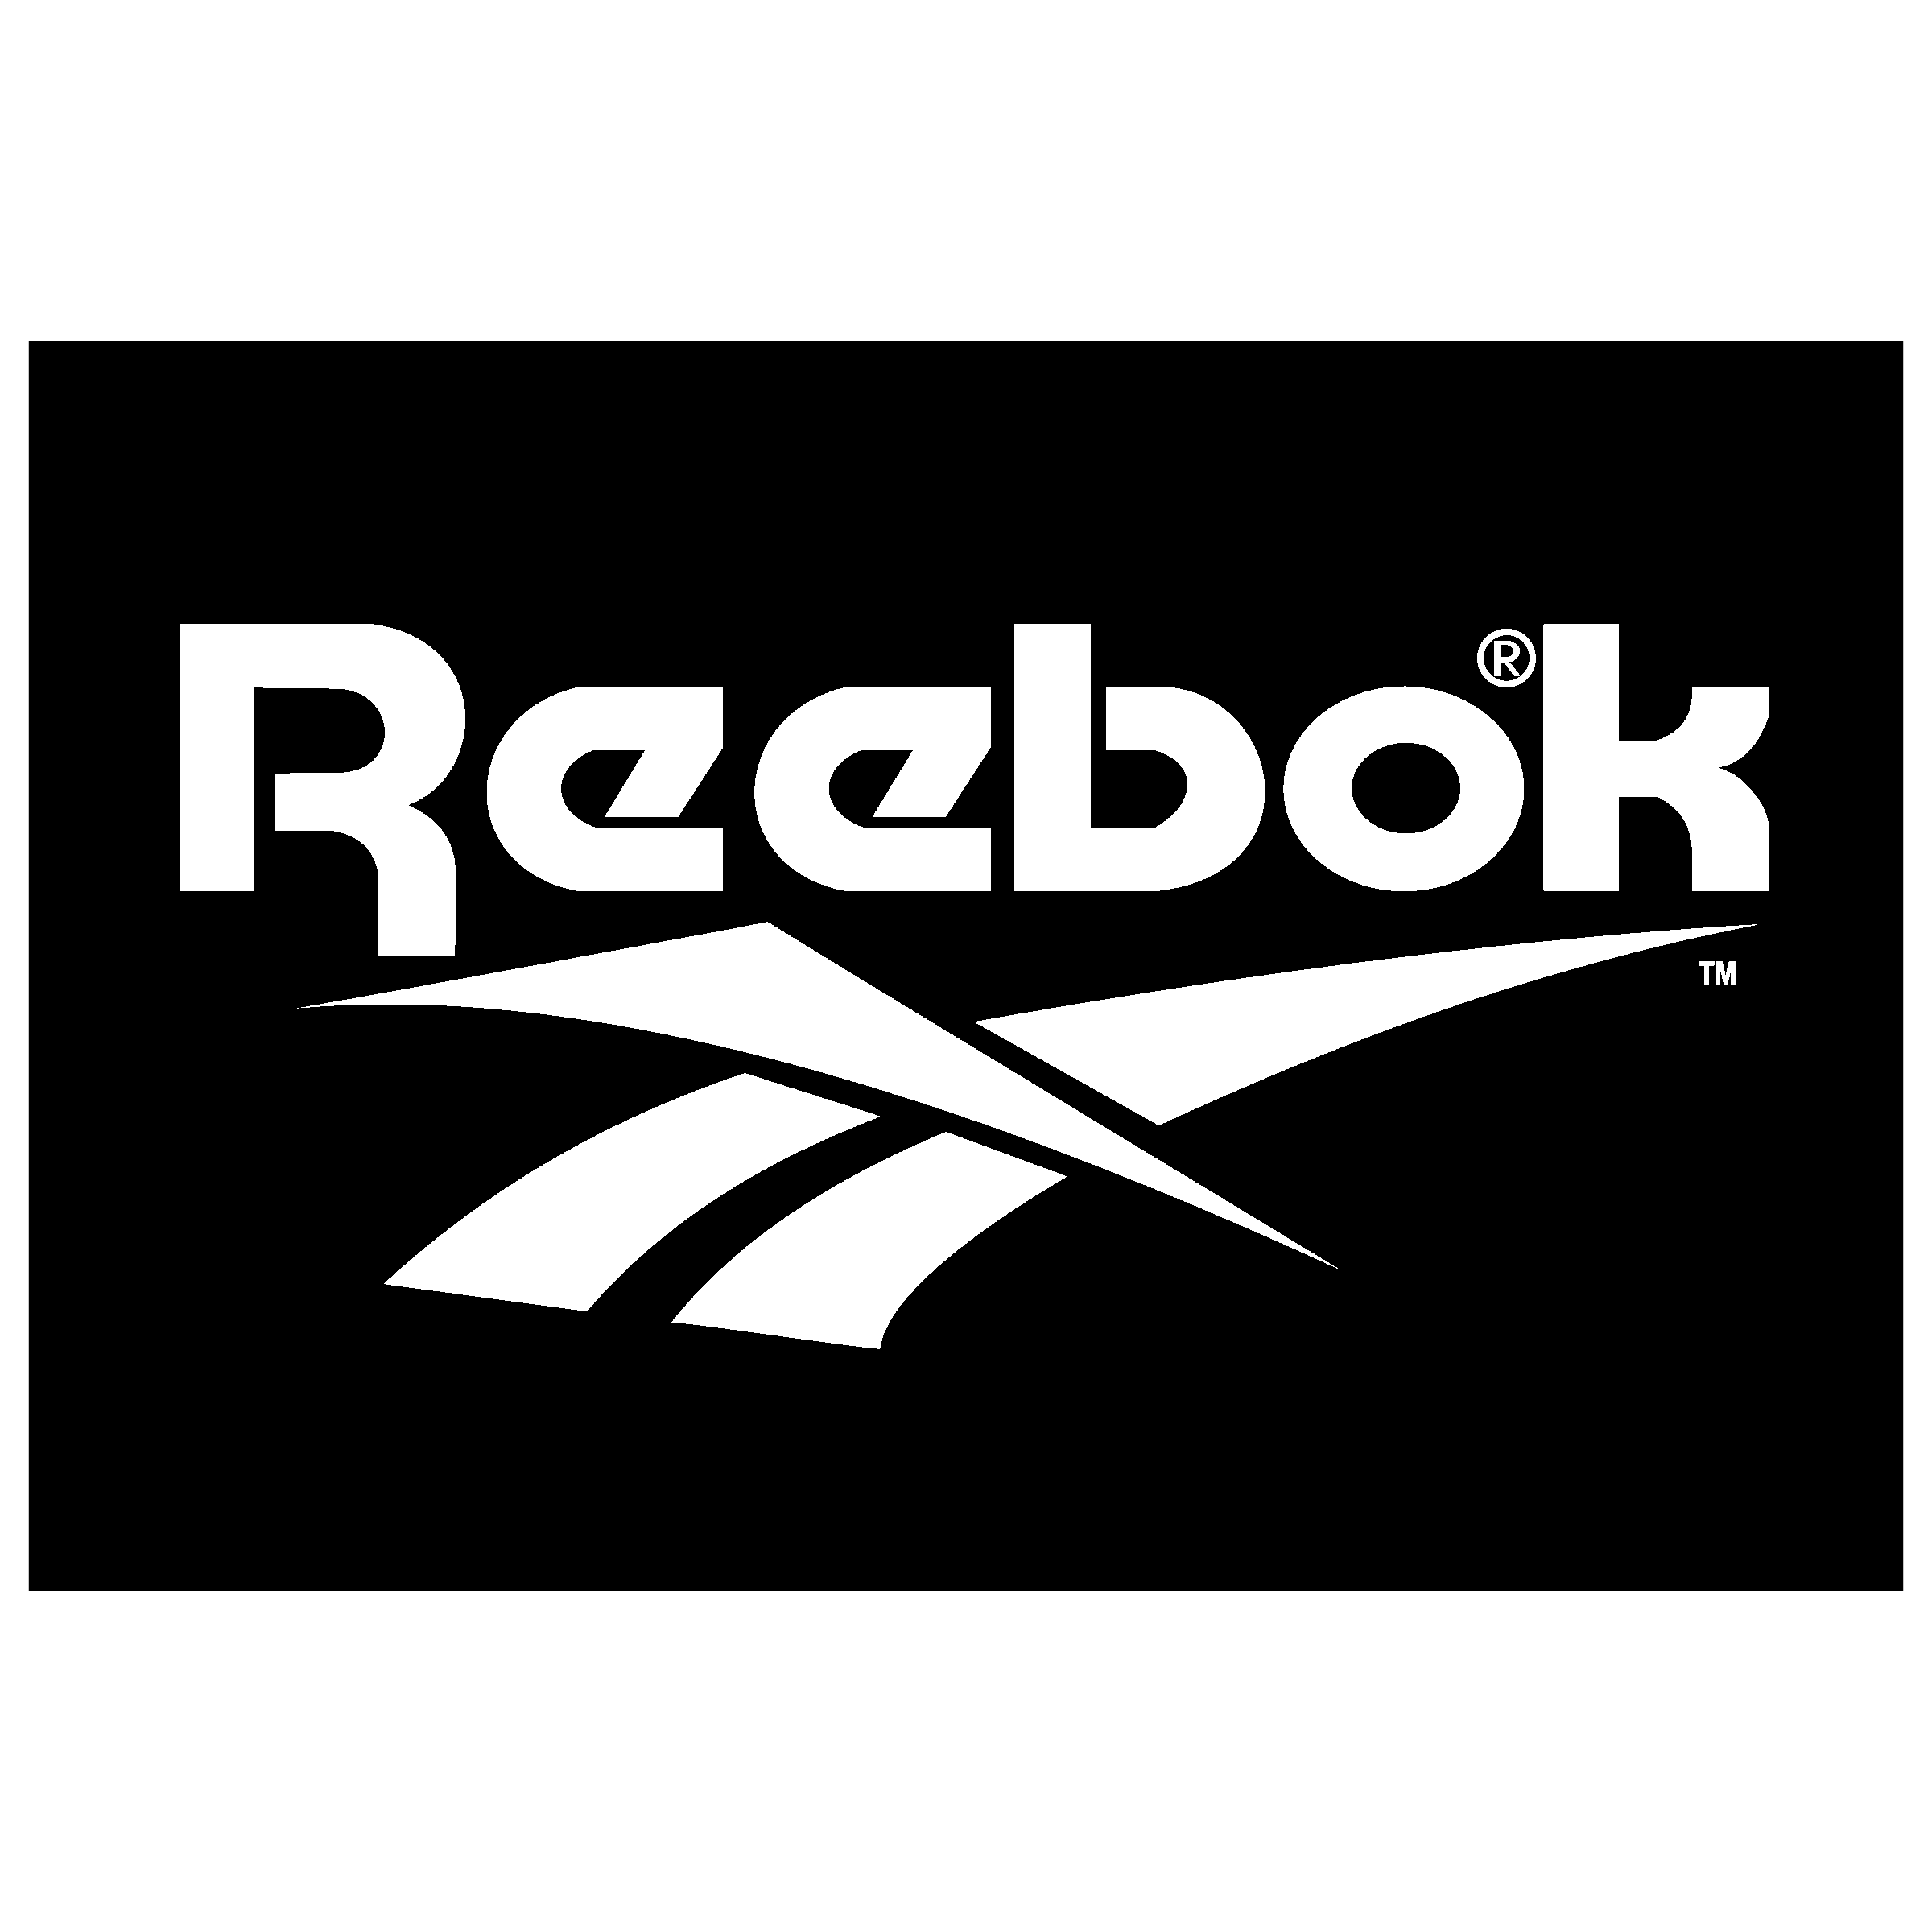 Black Reebok Logo - Reebok Logo PNG Transparent & SVG Vector - Freebie Supply